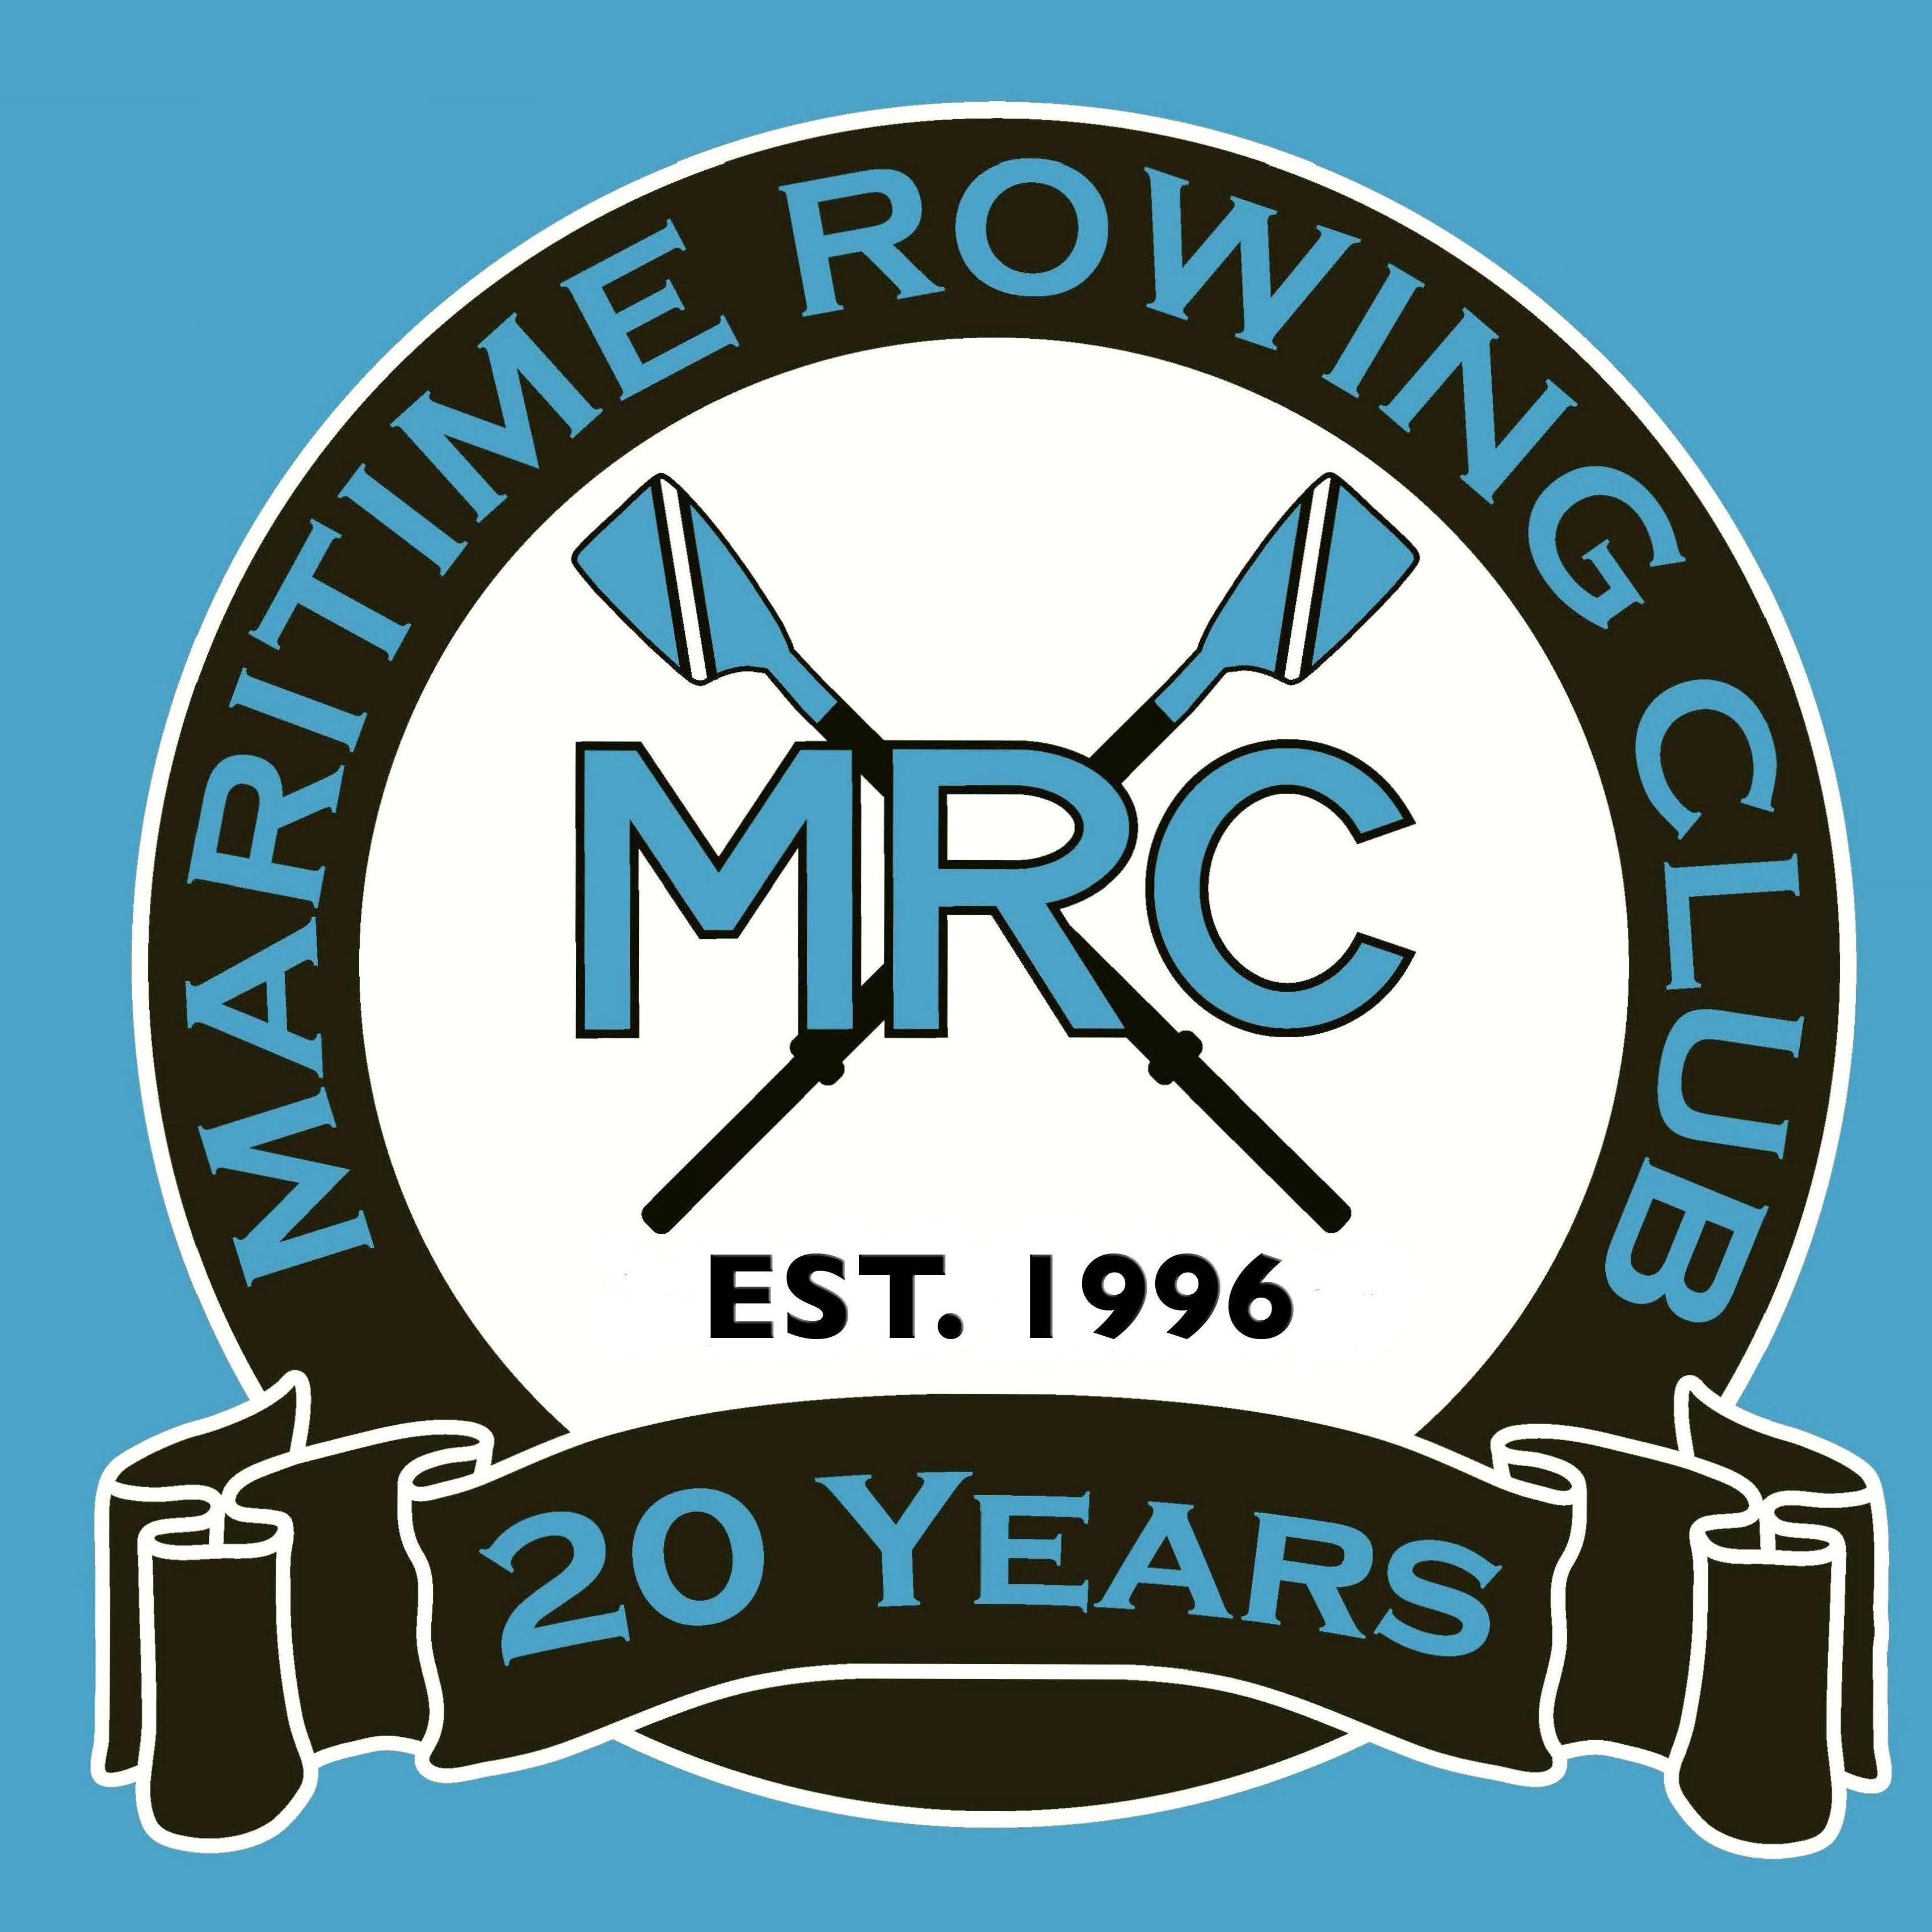 Maritime Rowing Club Photo